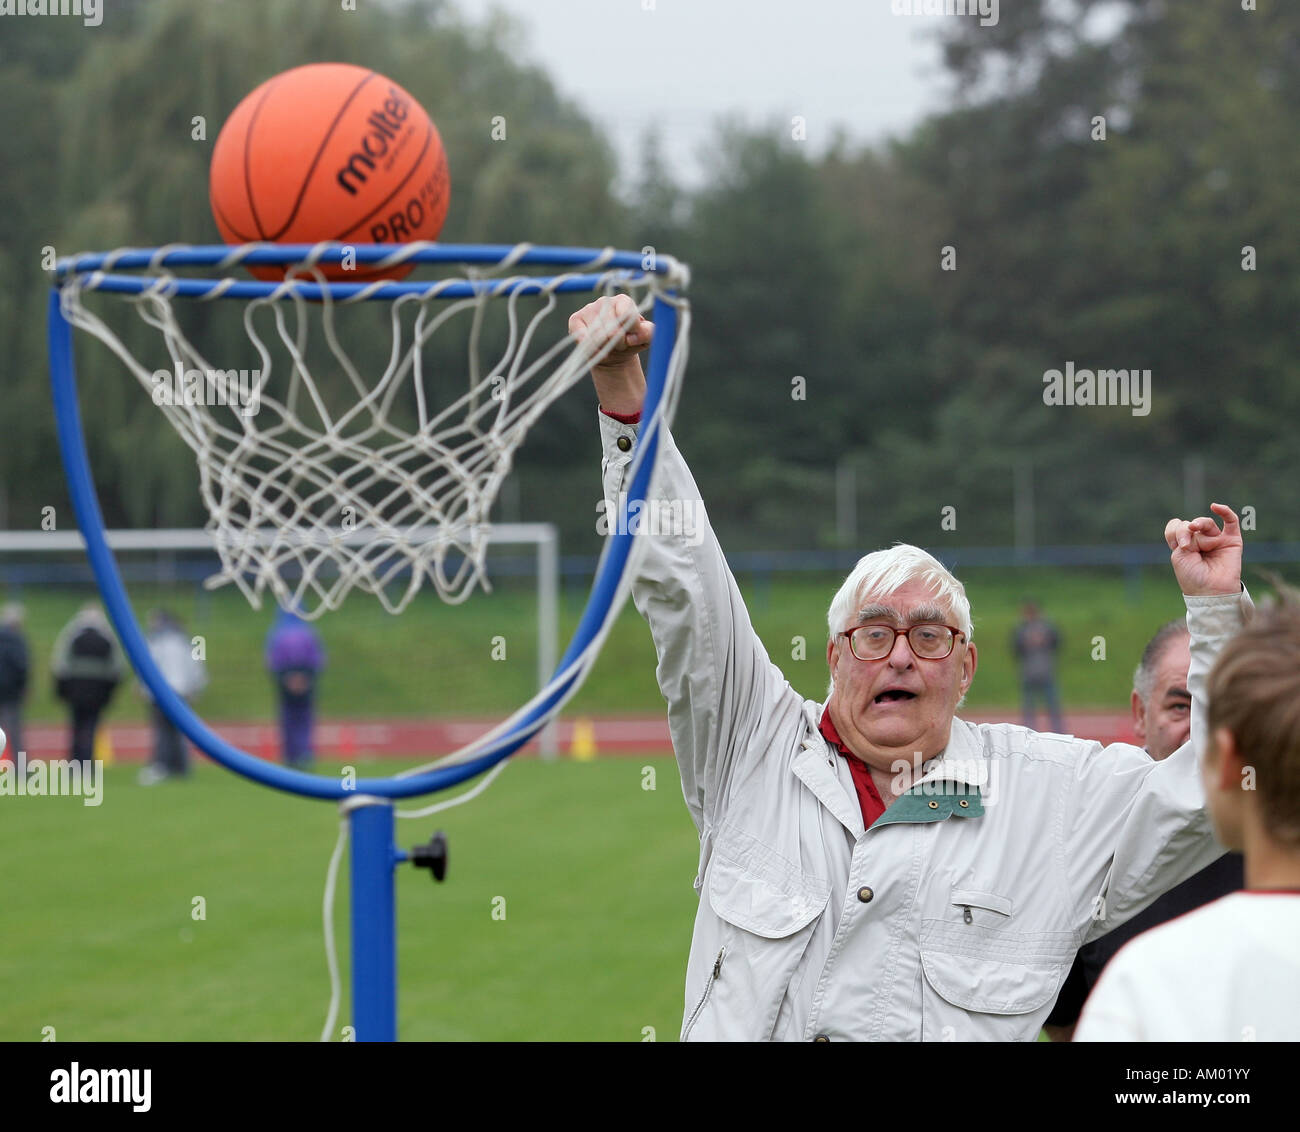 Handicapped man playing basketball Stock Photo